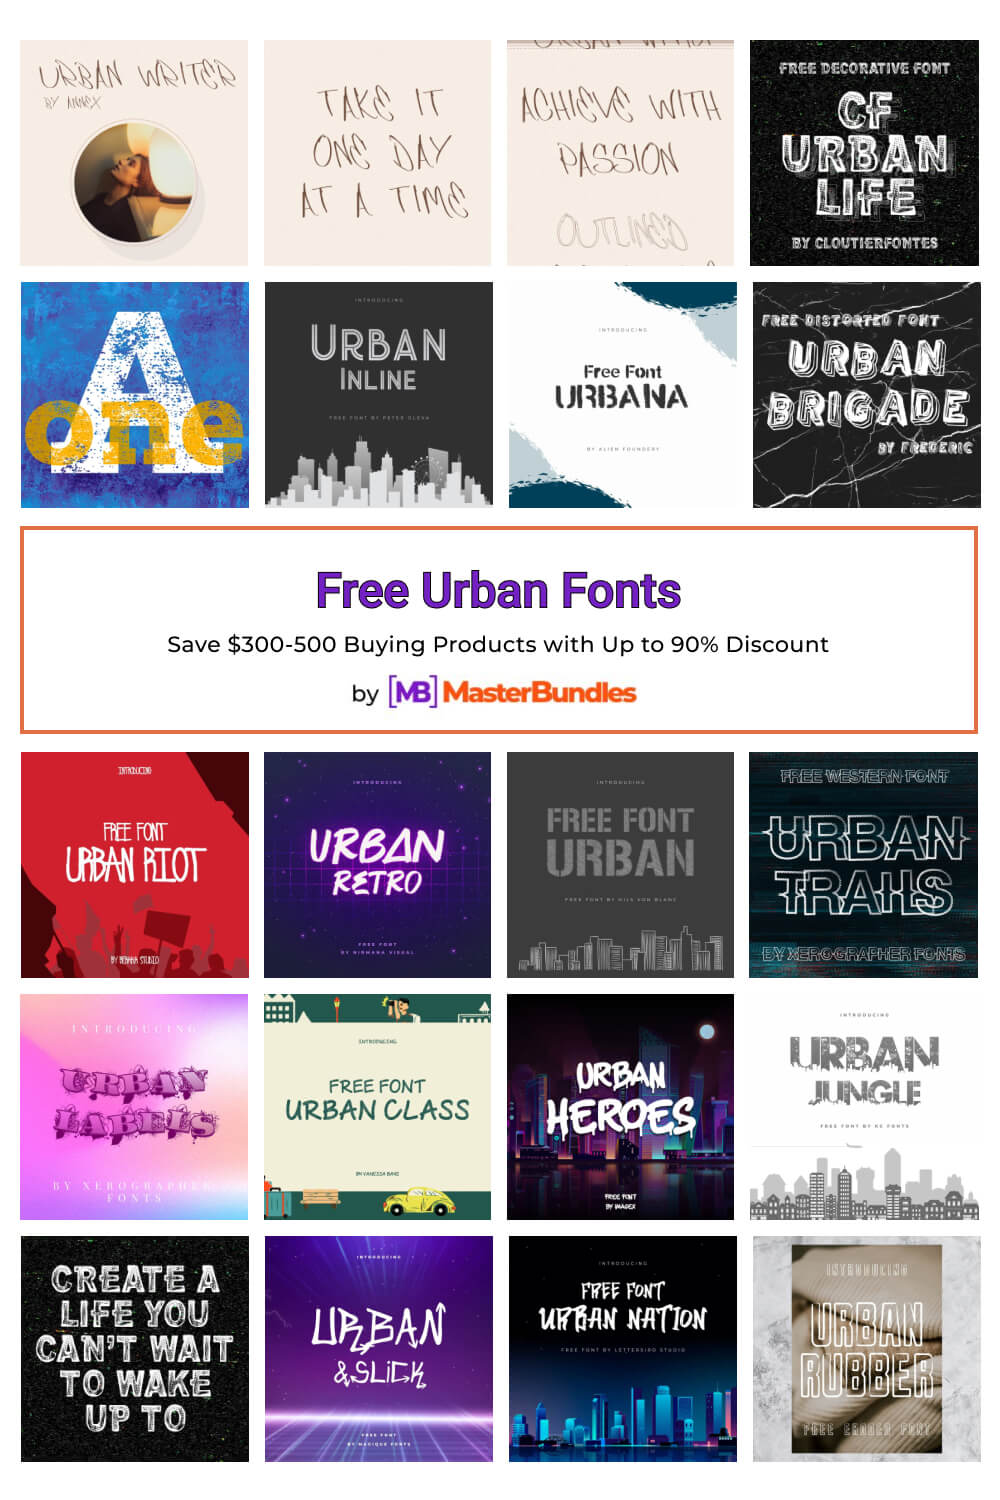 free urban fonts pinterest image.